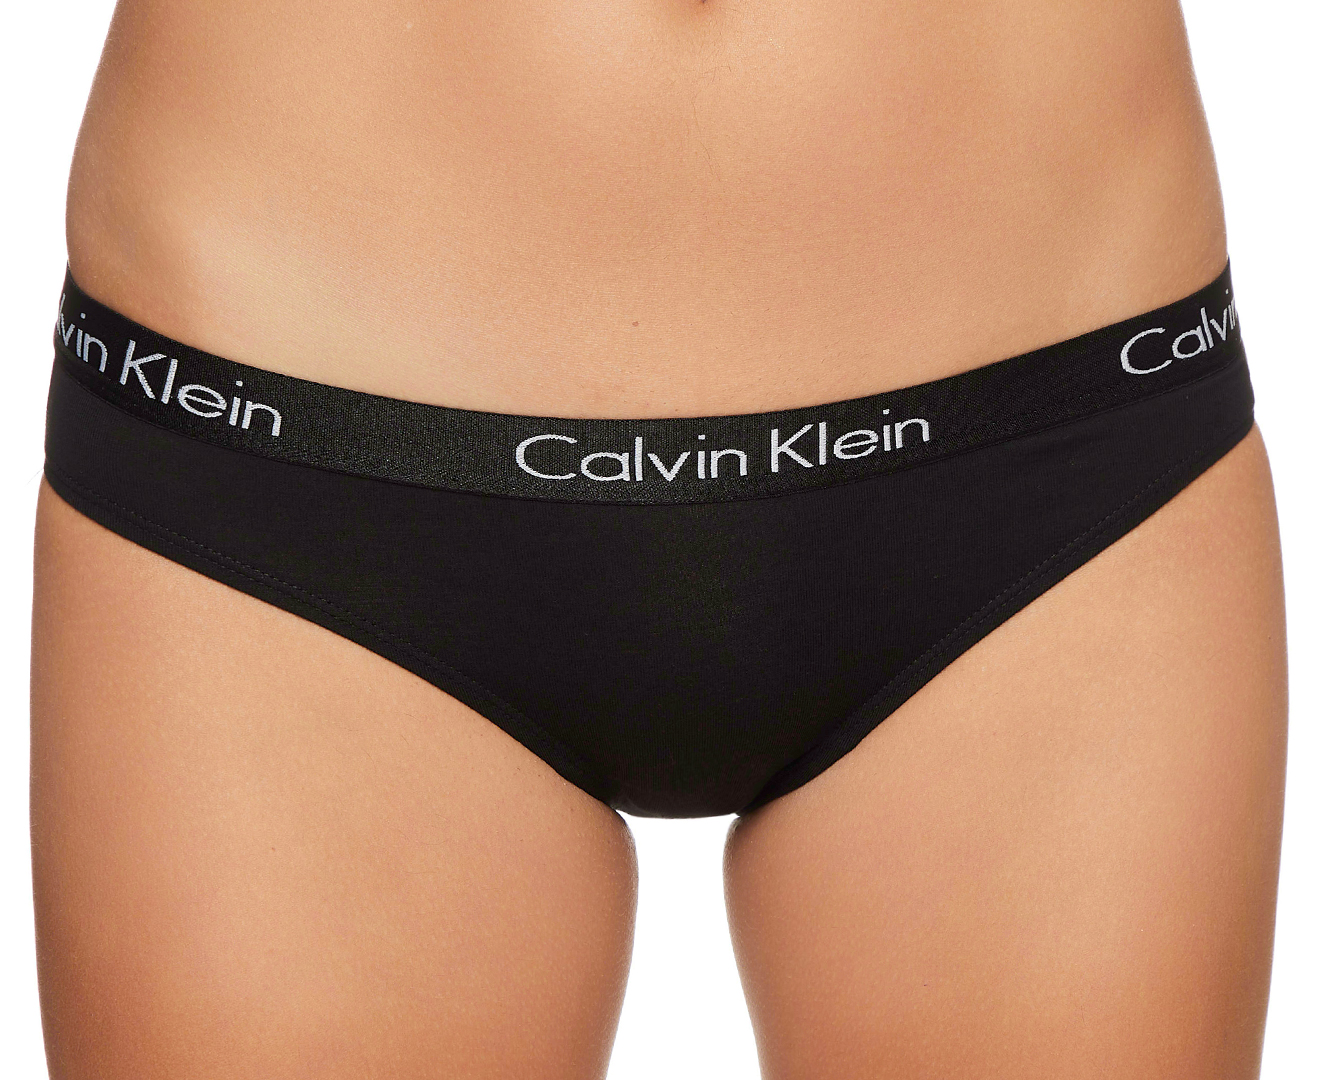 Calvin Klein Women's Motive Cotton Thongs 3-Pack - Black/Lipgloss